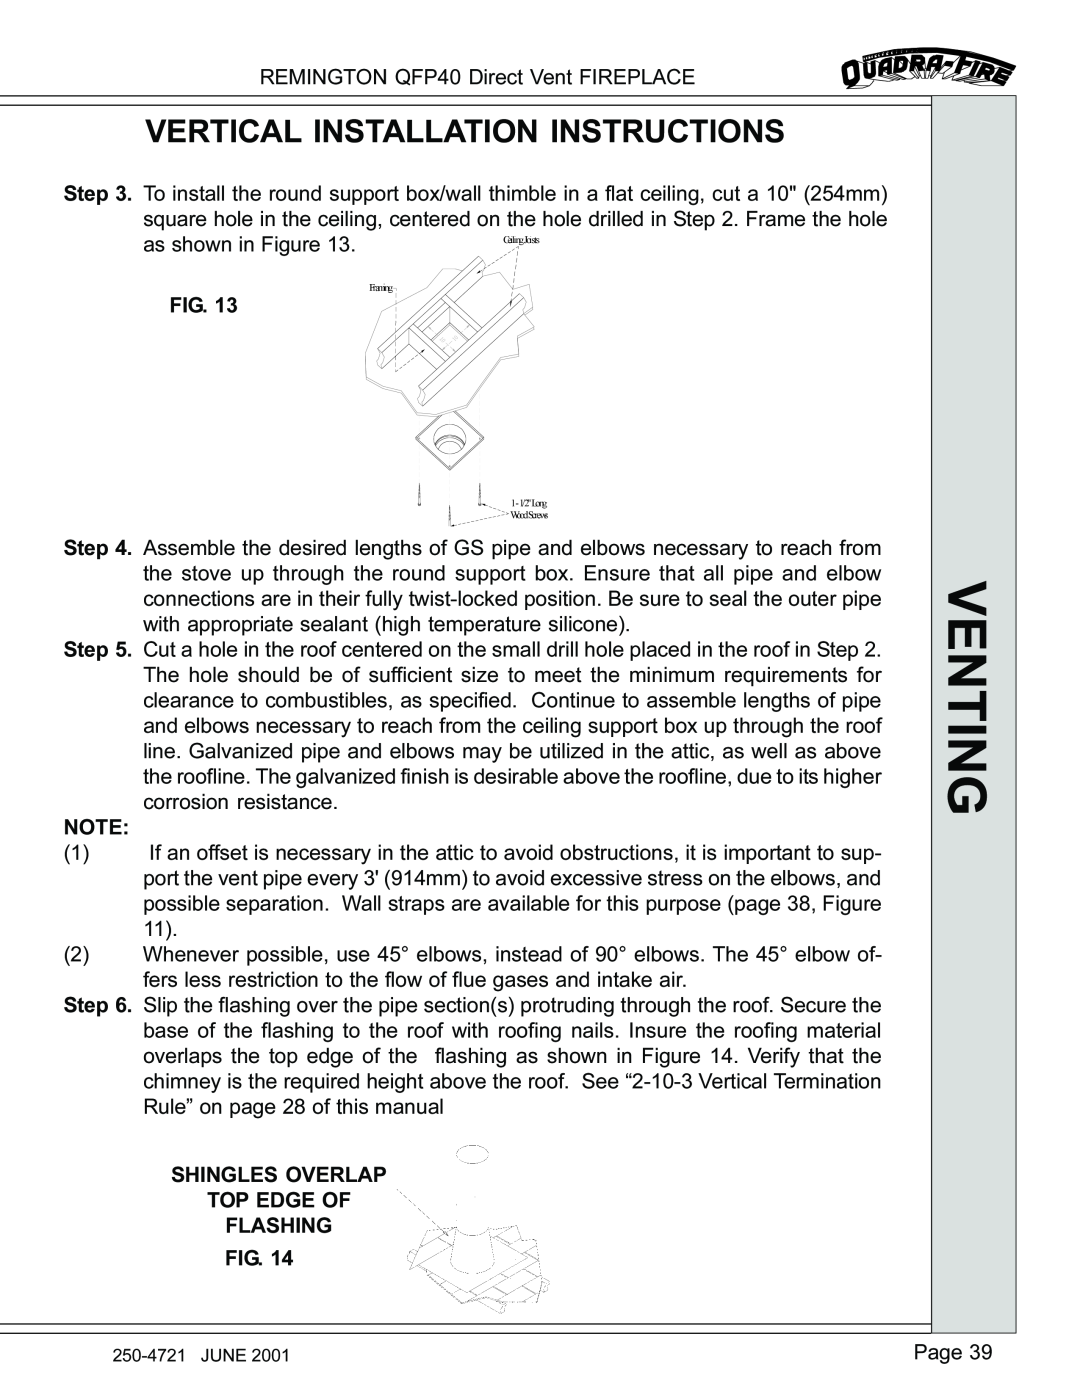 Remington QFP40 manual Venting, Page 